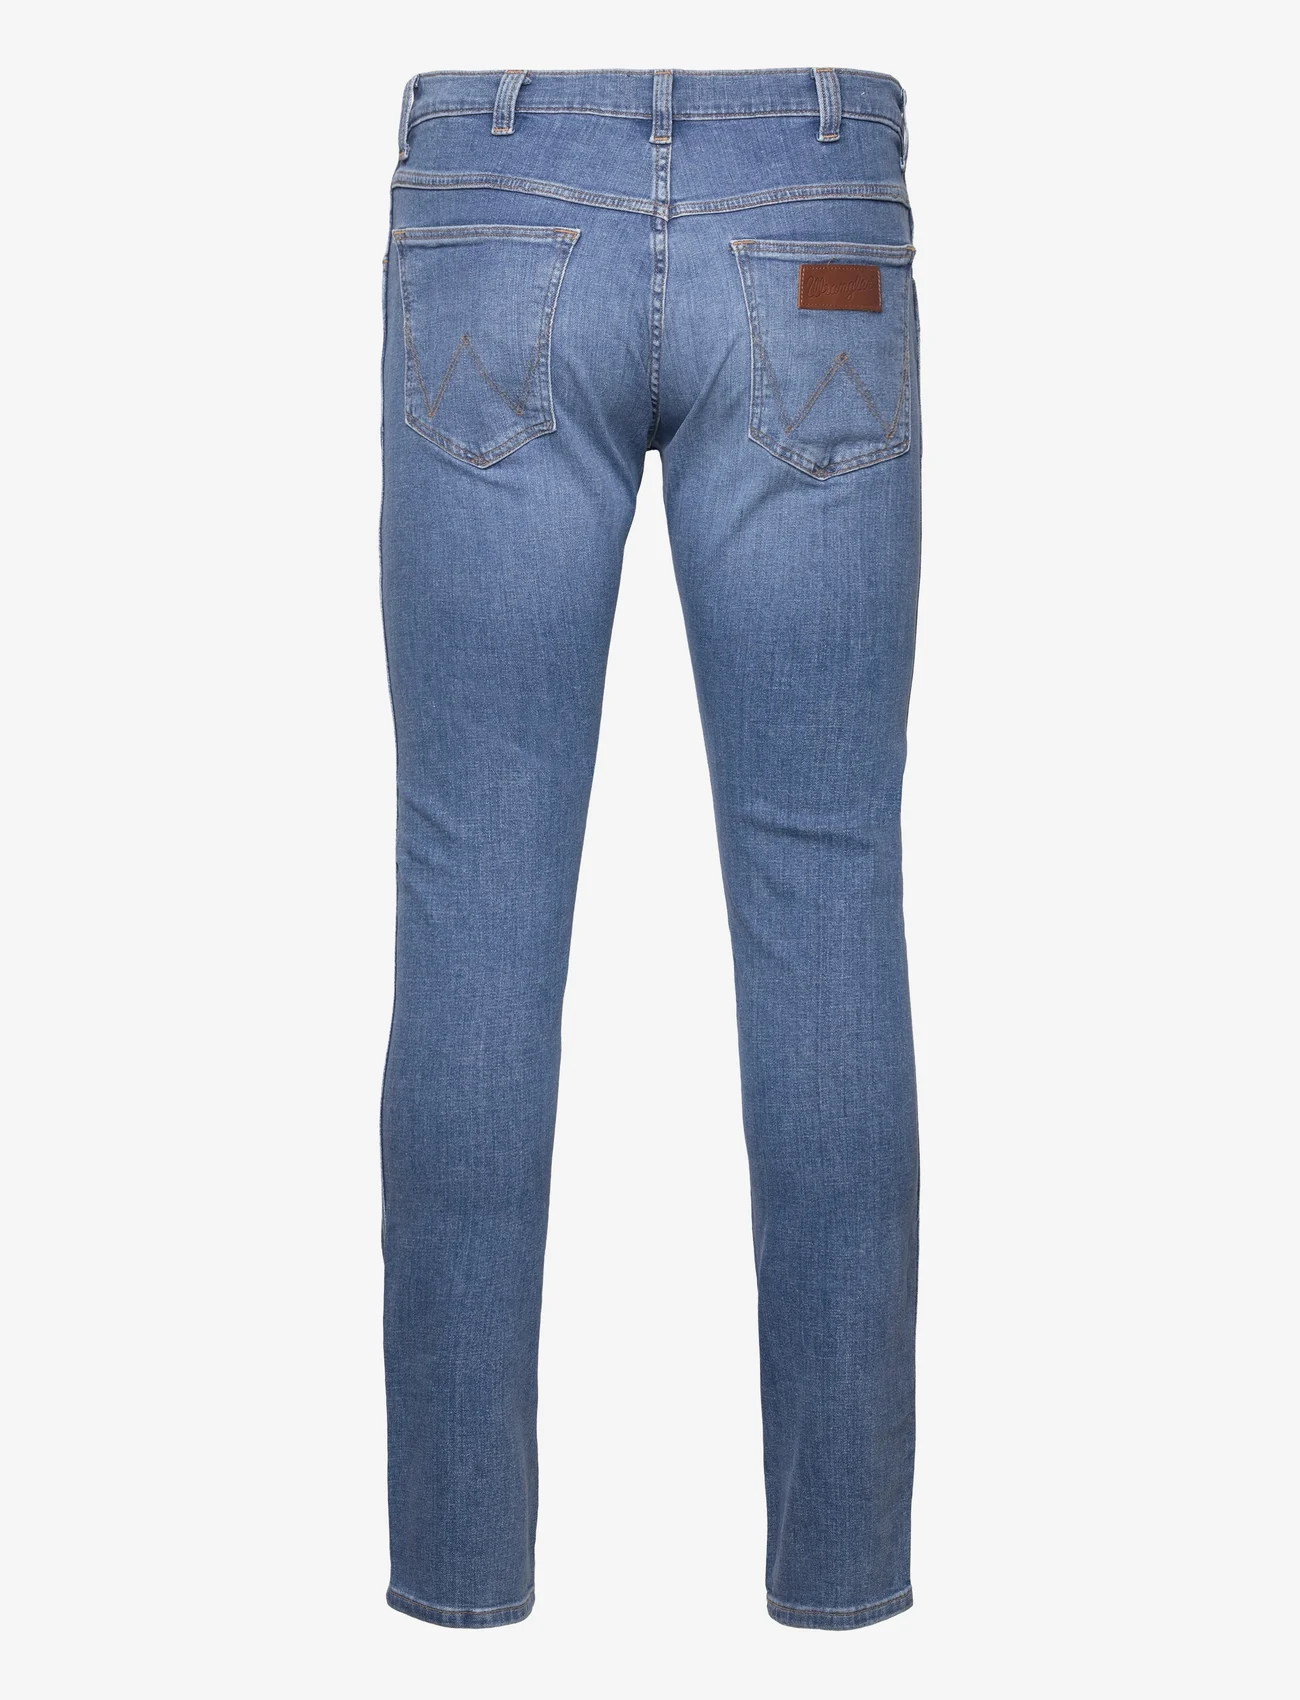 Wrangler - BRYSON - skinny jeans - fortunate - 1